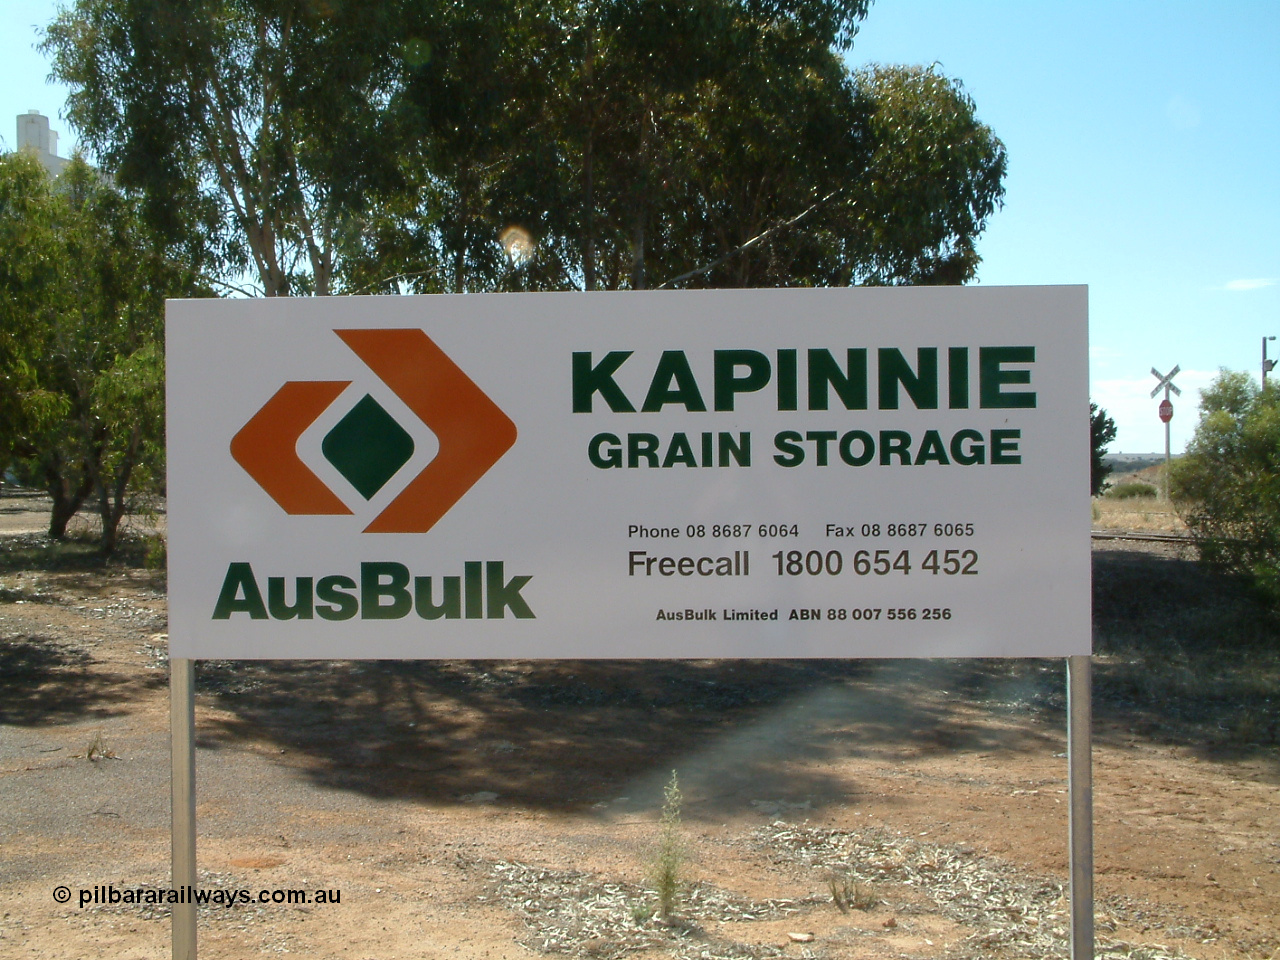 030406 142926
Kapinnie, brand new AusBulk sign for Kapinnie silos. 6th April 2003.
